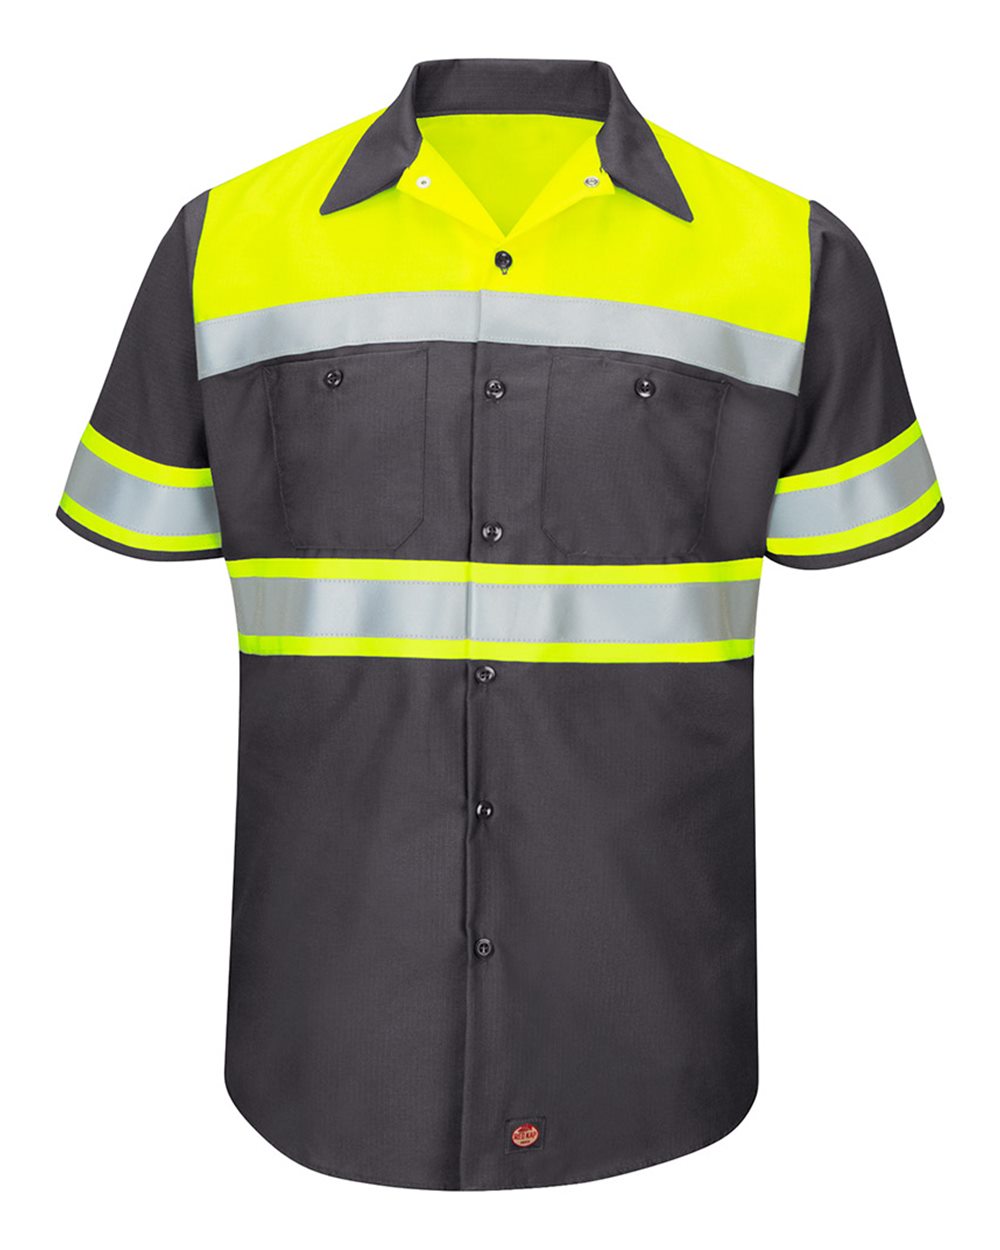 50330 Hi-Visibility Colorblock Ripstop Short Sleeve Work Shirt - SY80